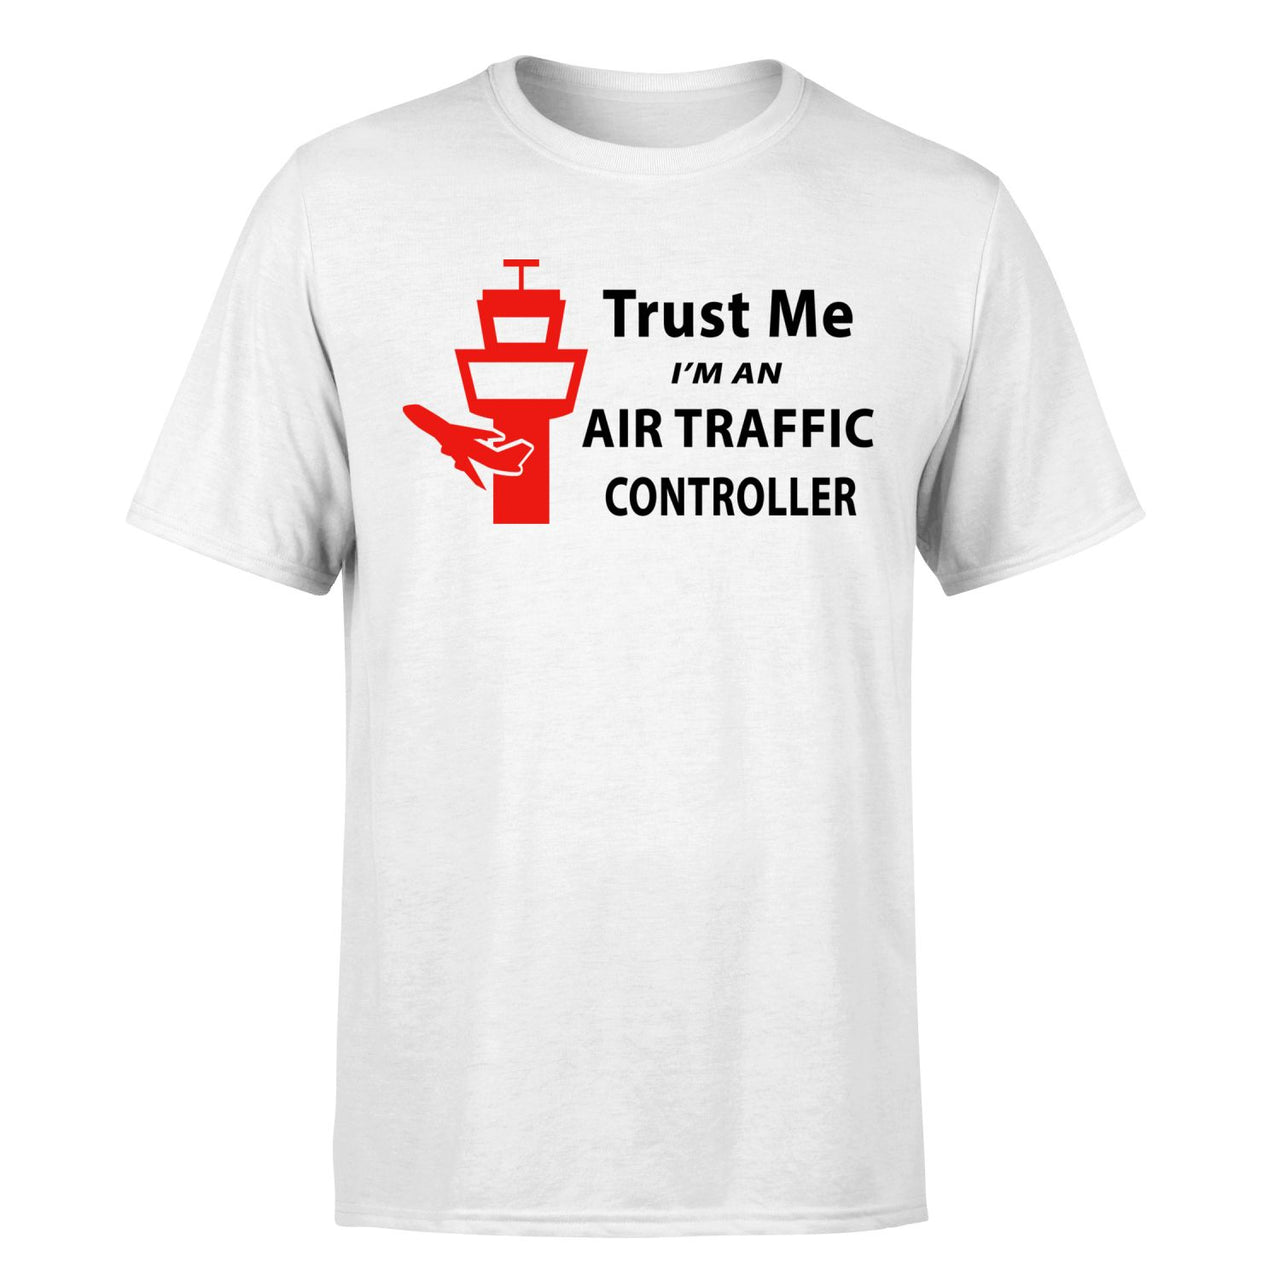 Trust Me I'm an Air Traffic Controller Designed T-Shirts